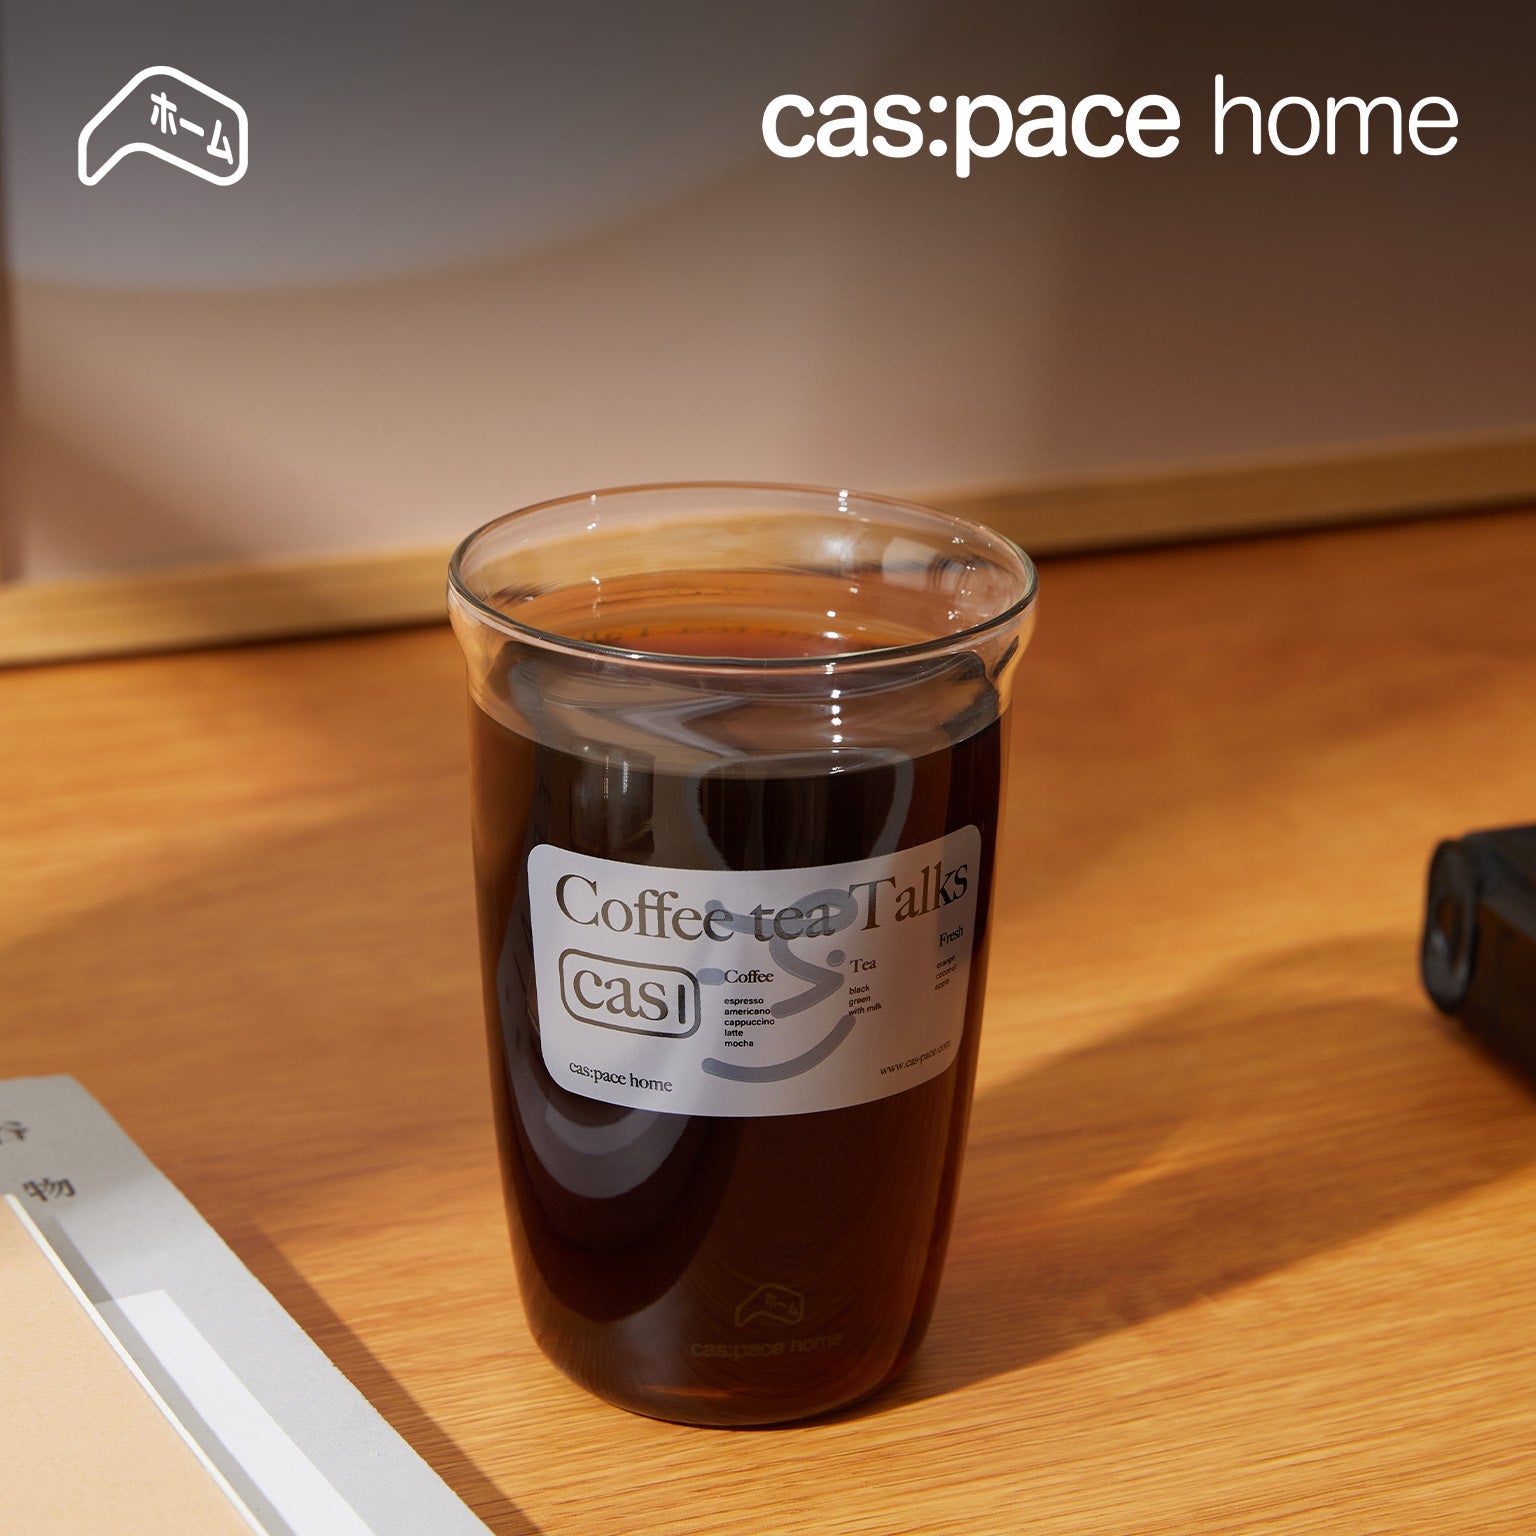 cas:pace home「コーヒー・お茶・トーク」カップ - cas:pace 殼空間